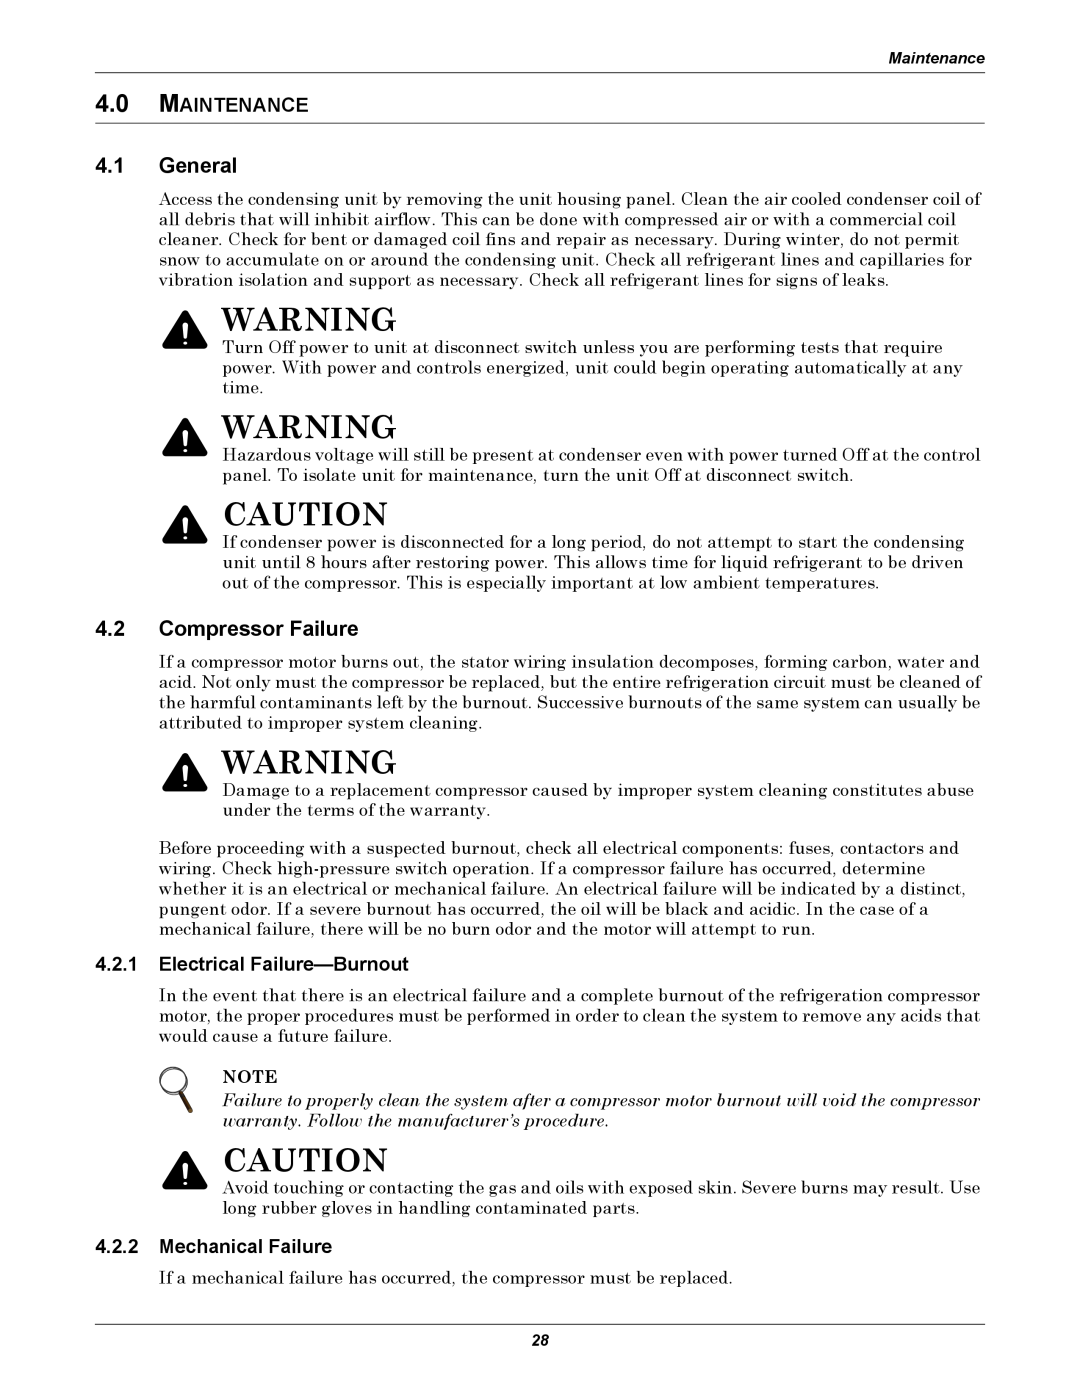 Emerson Figure i manual 4.1General, 4.2Compressor Failure, 4.0MAINTENANCE, 4.2.1Electrical Failure-Burnout 